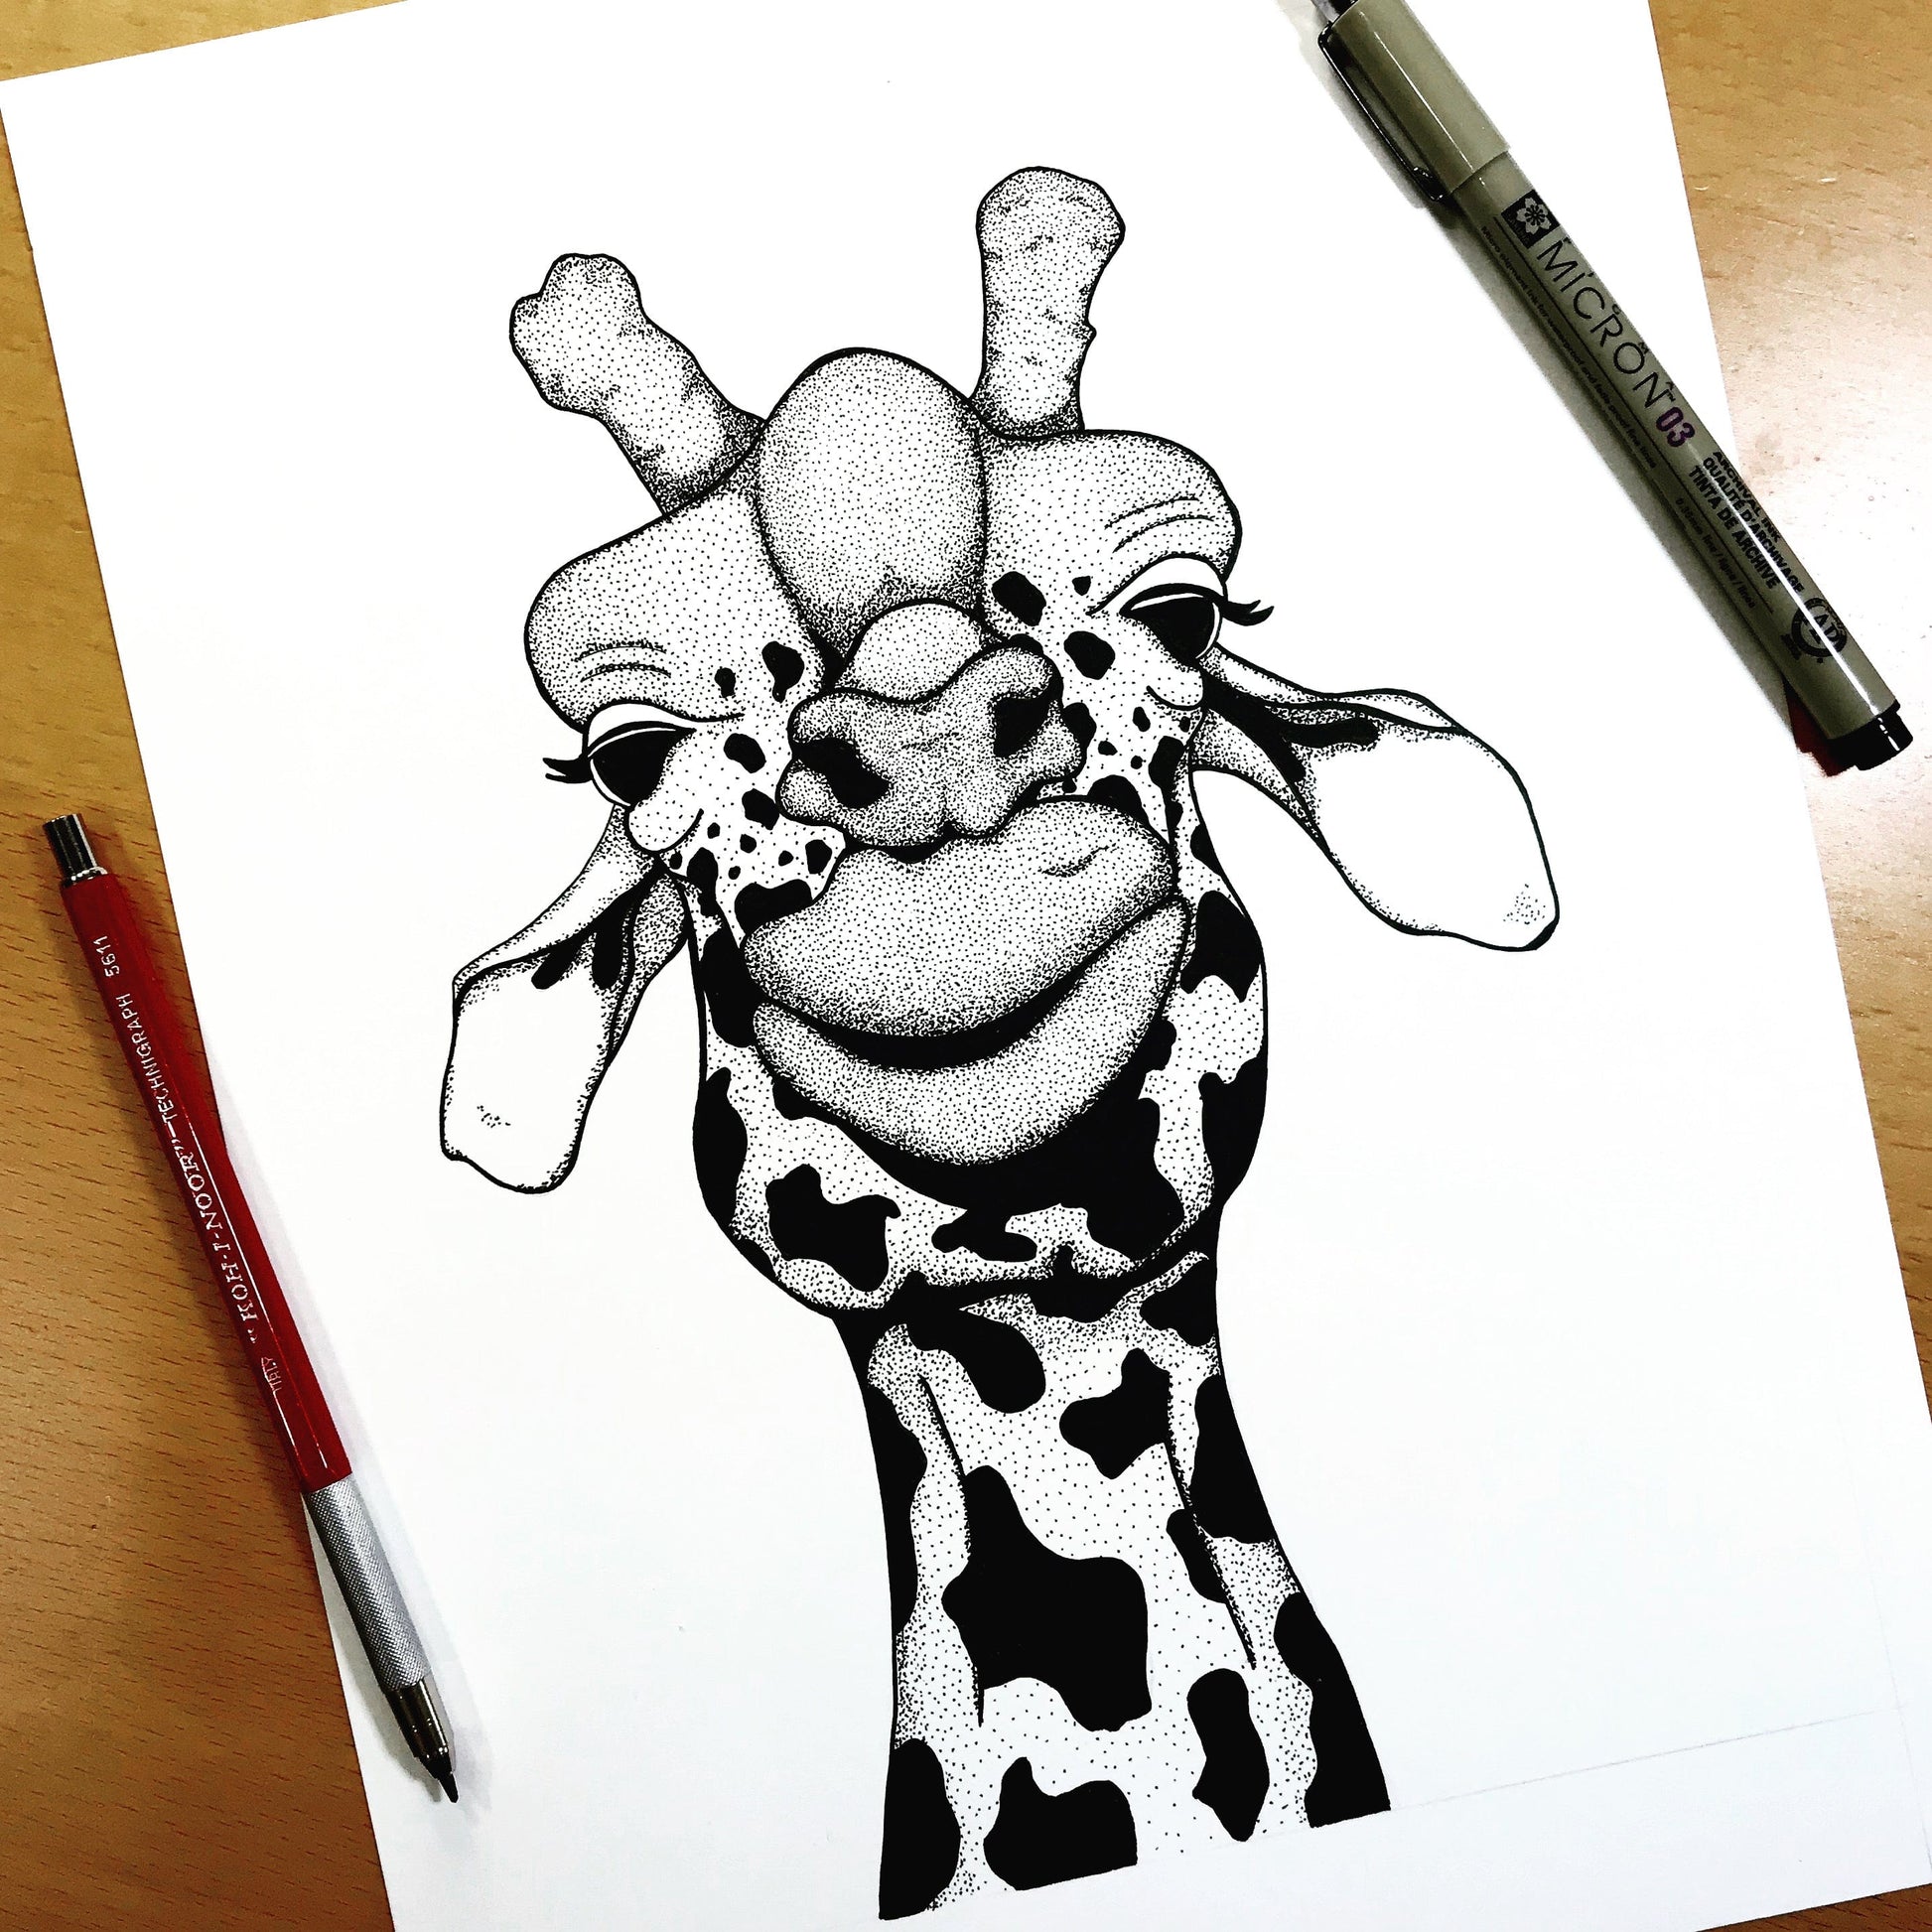 PinkPolish Design Original Art "Papa Giraffe" Funny Giraffe Inspired Original Ink Illustration